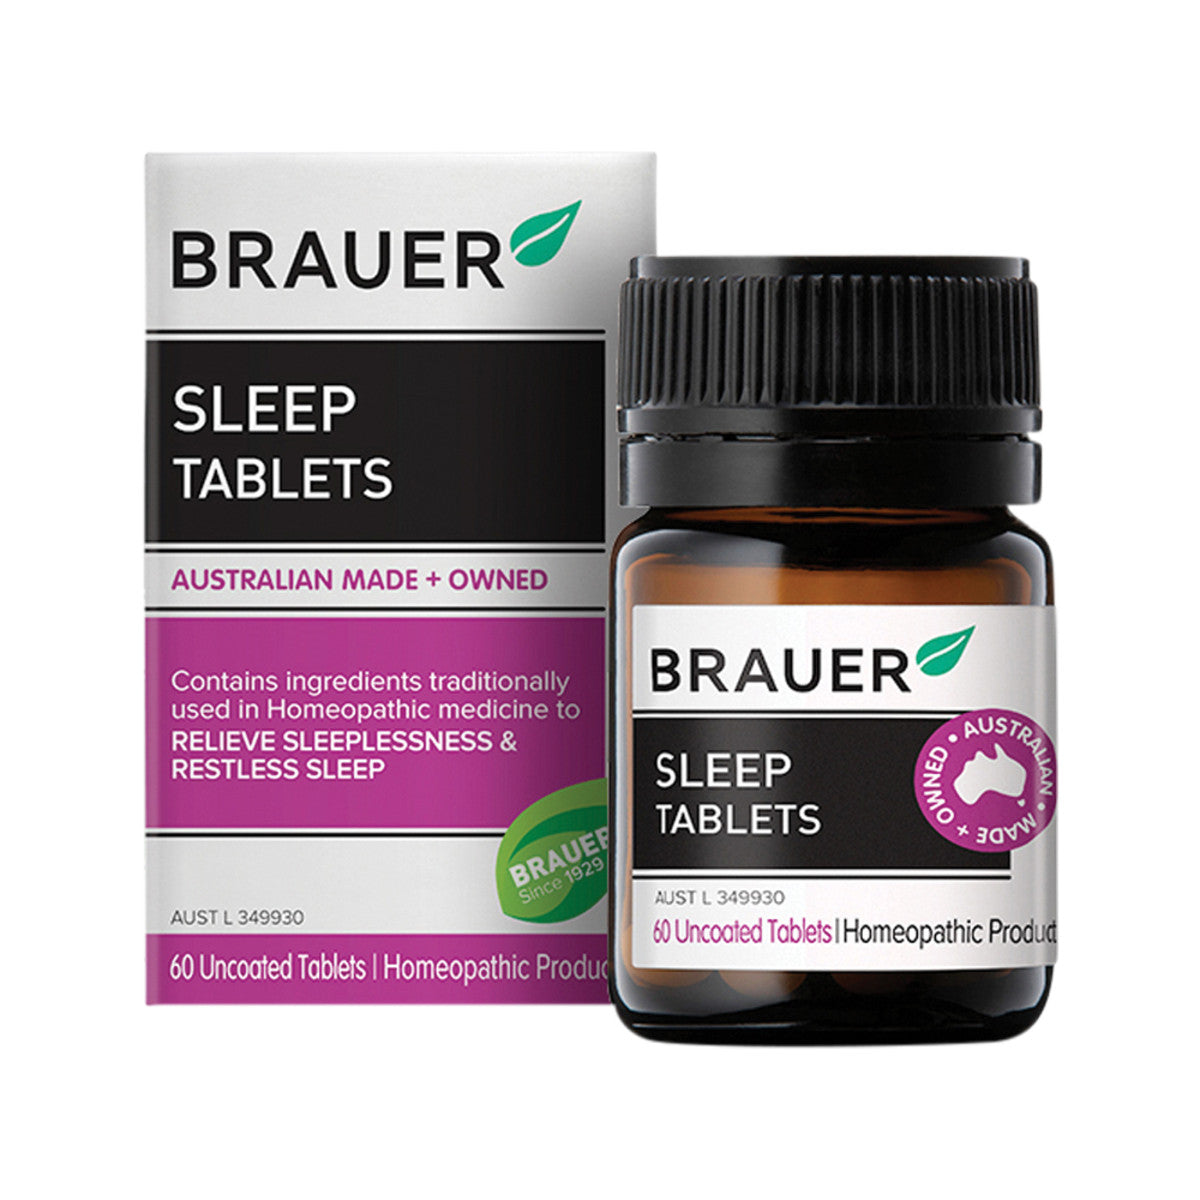 Brauer - Sleep Tablets